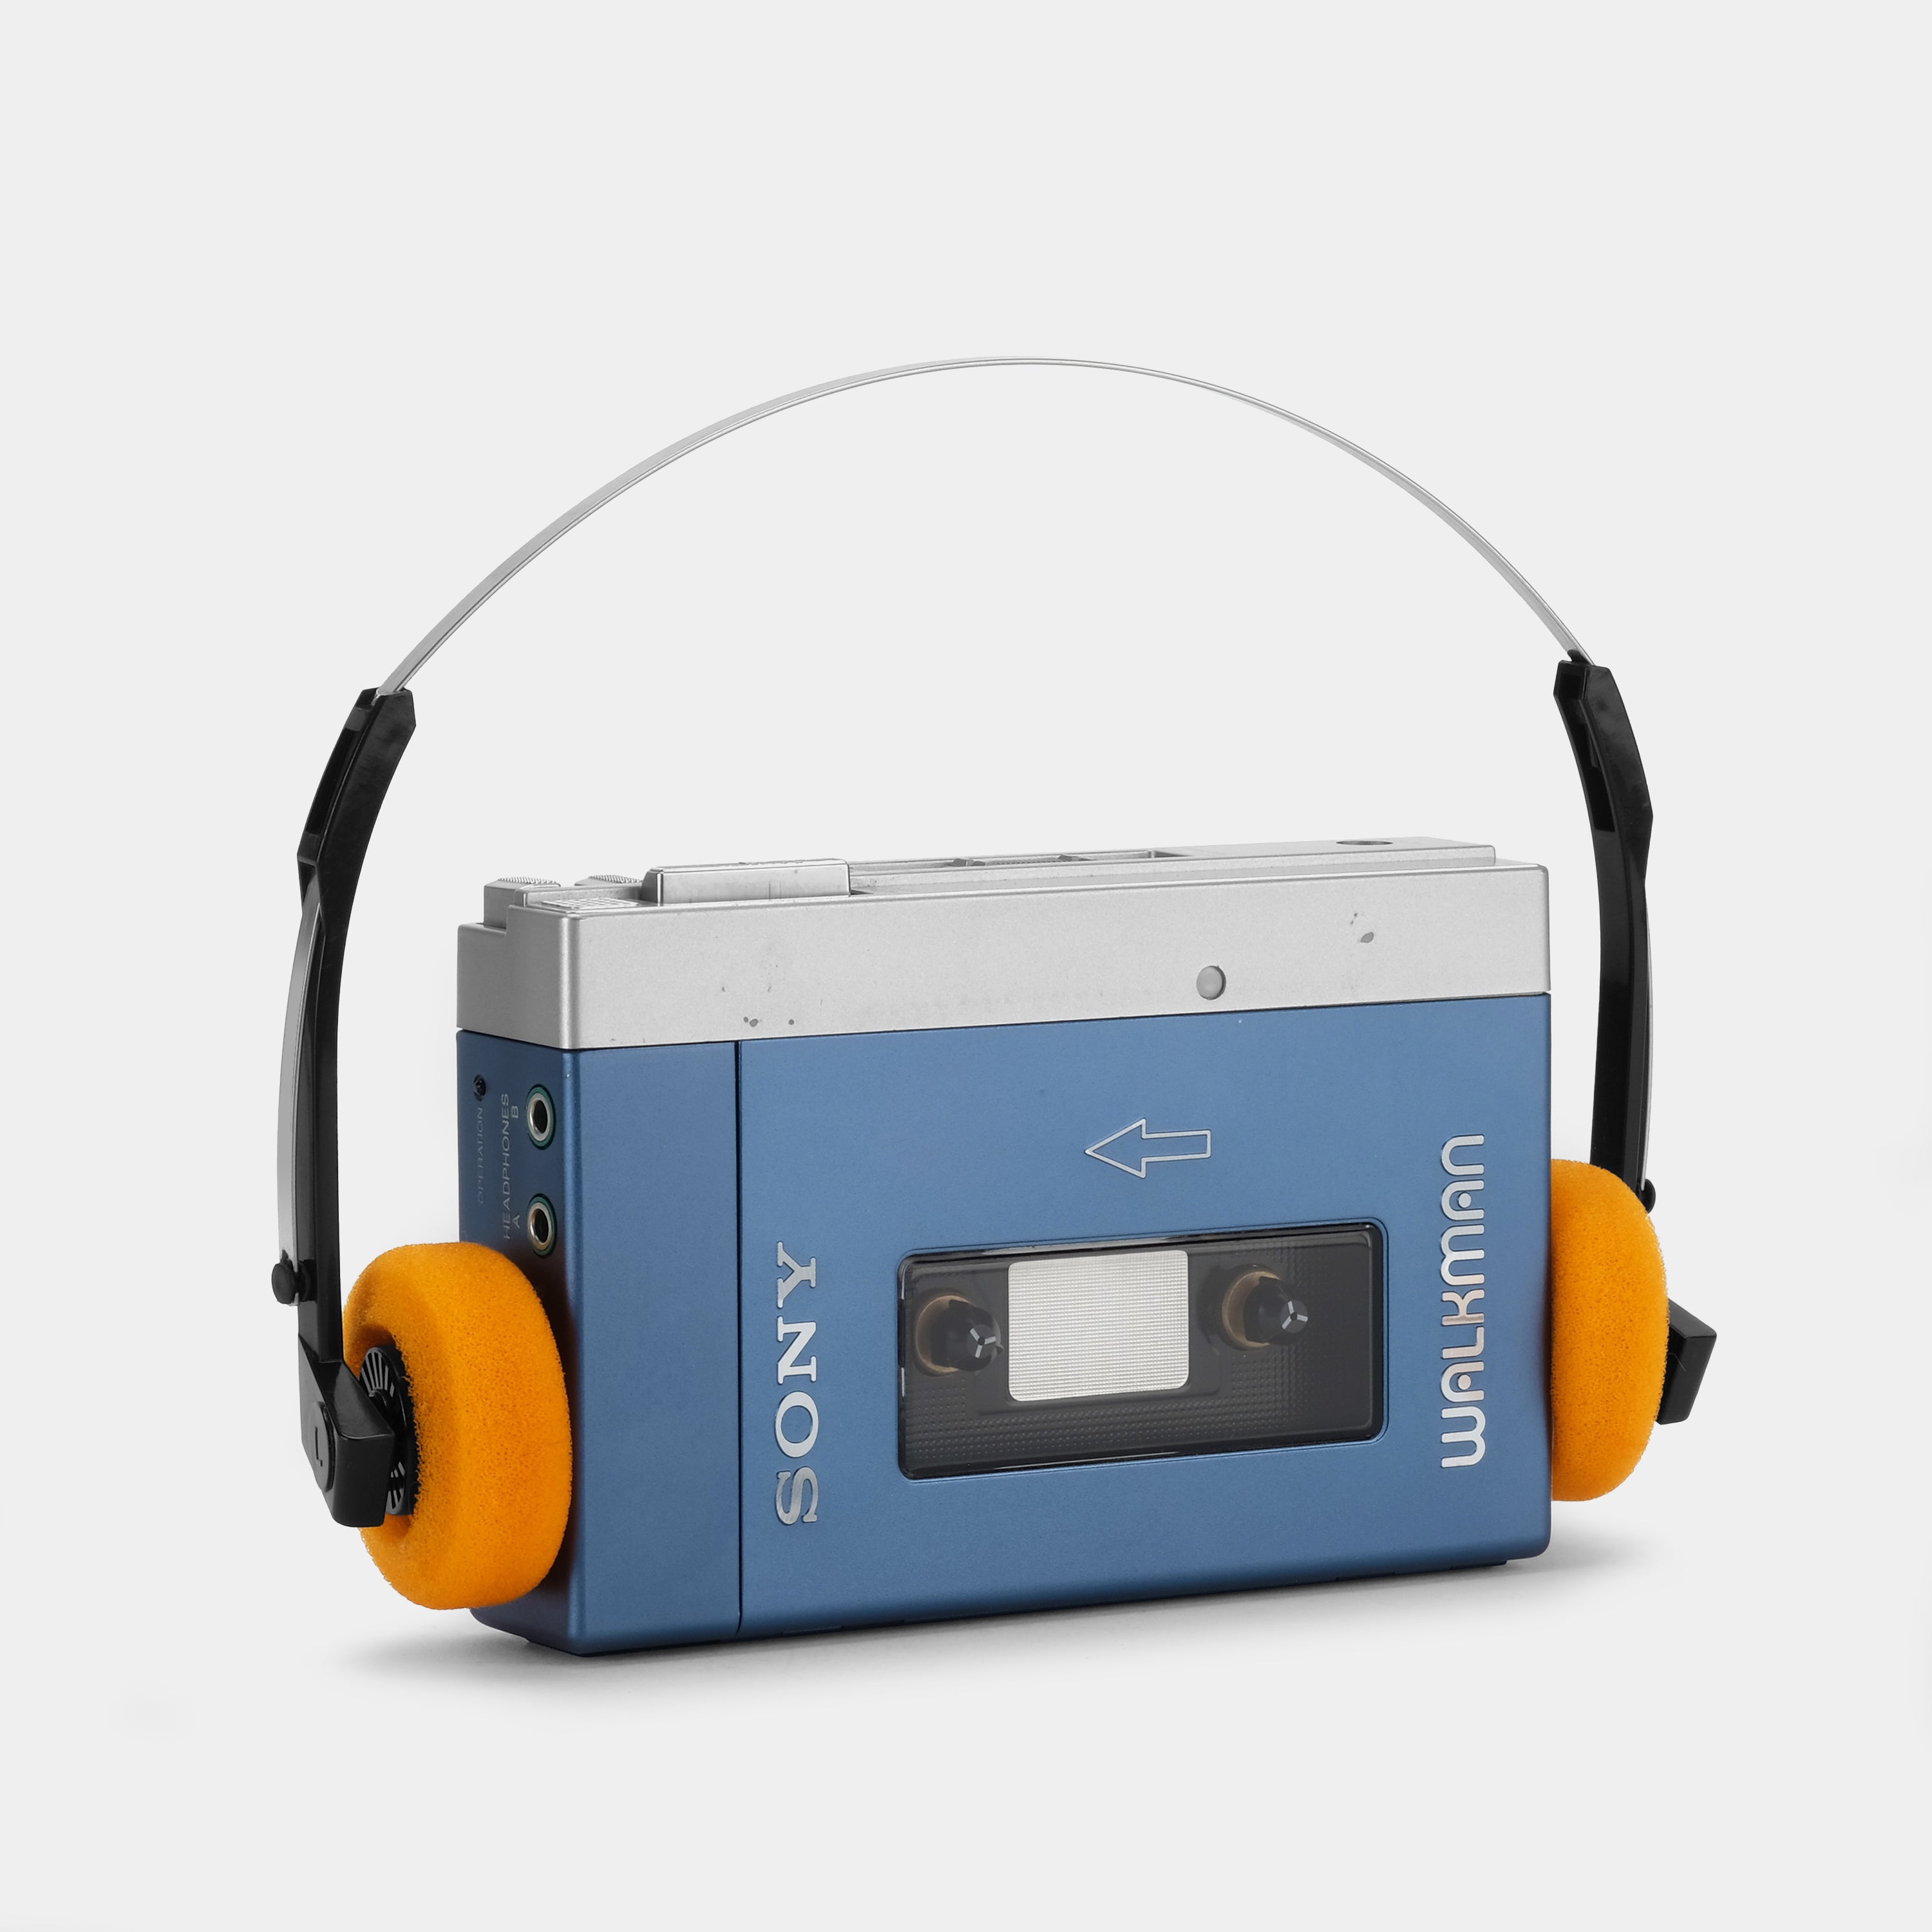 Sony Walkman TPS-L2 Portable Cassette Player